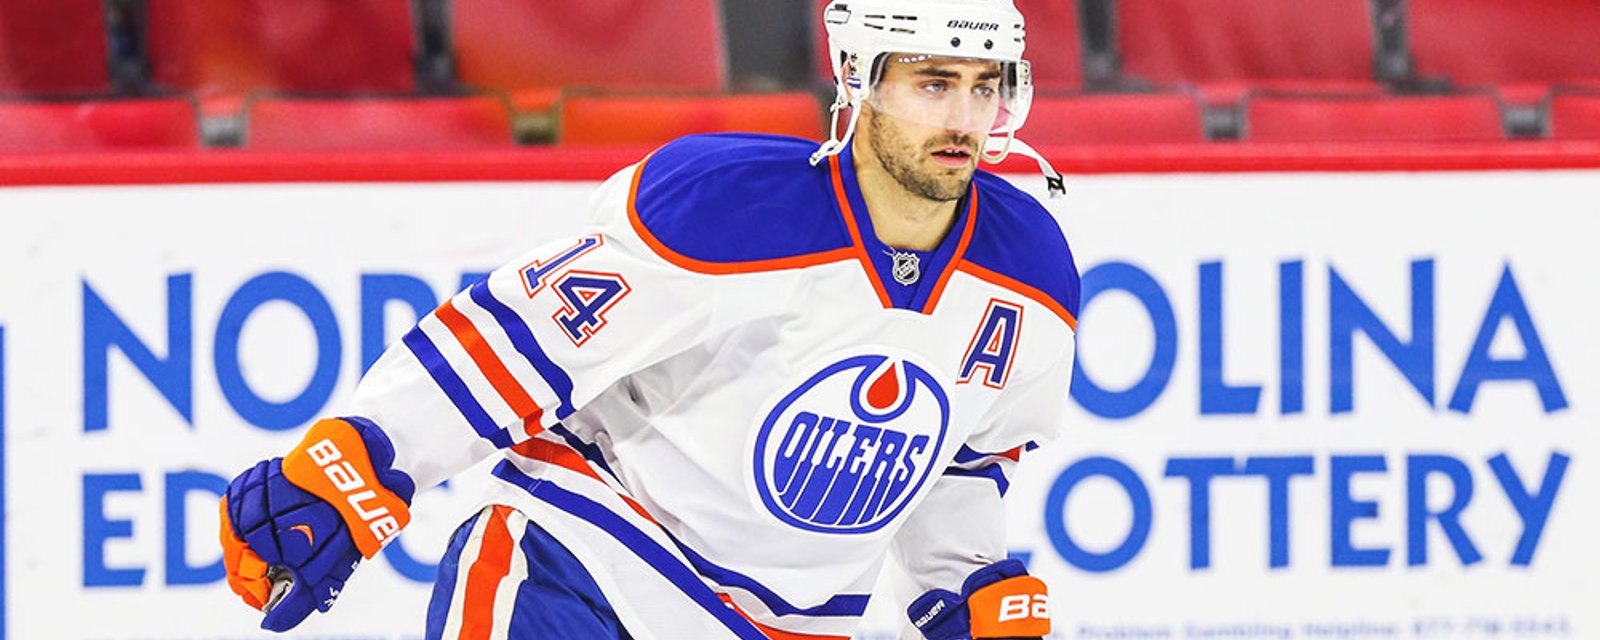 Breaking: NHL insider reports Jordan Eberle has been traded